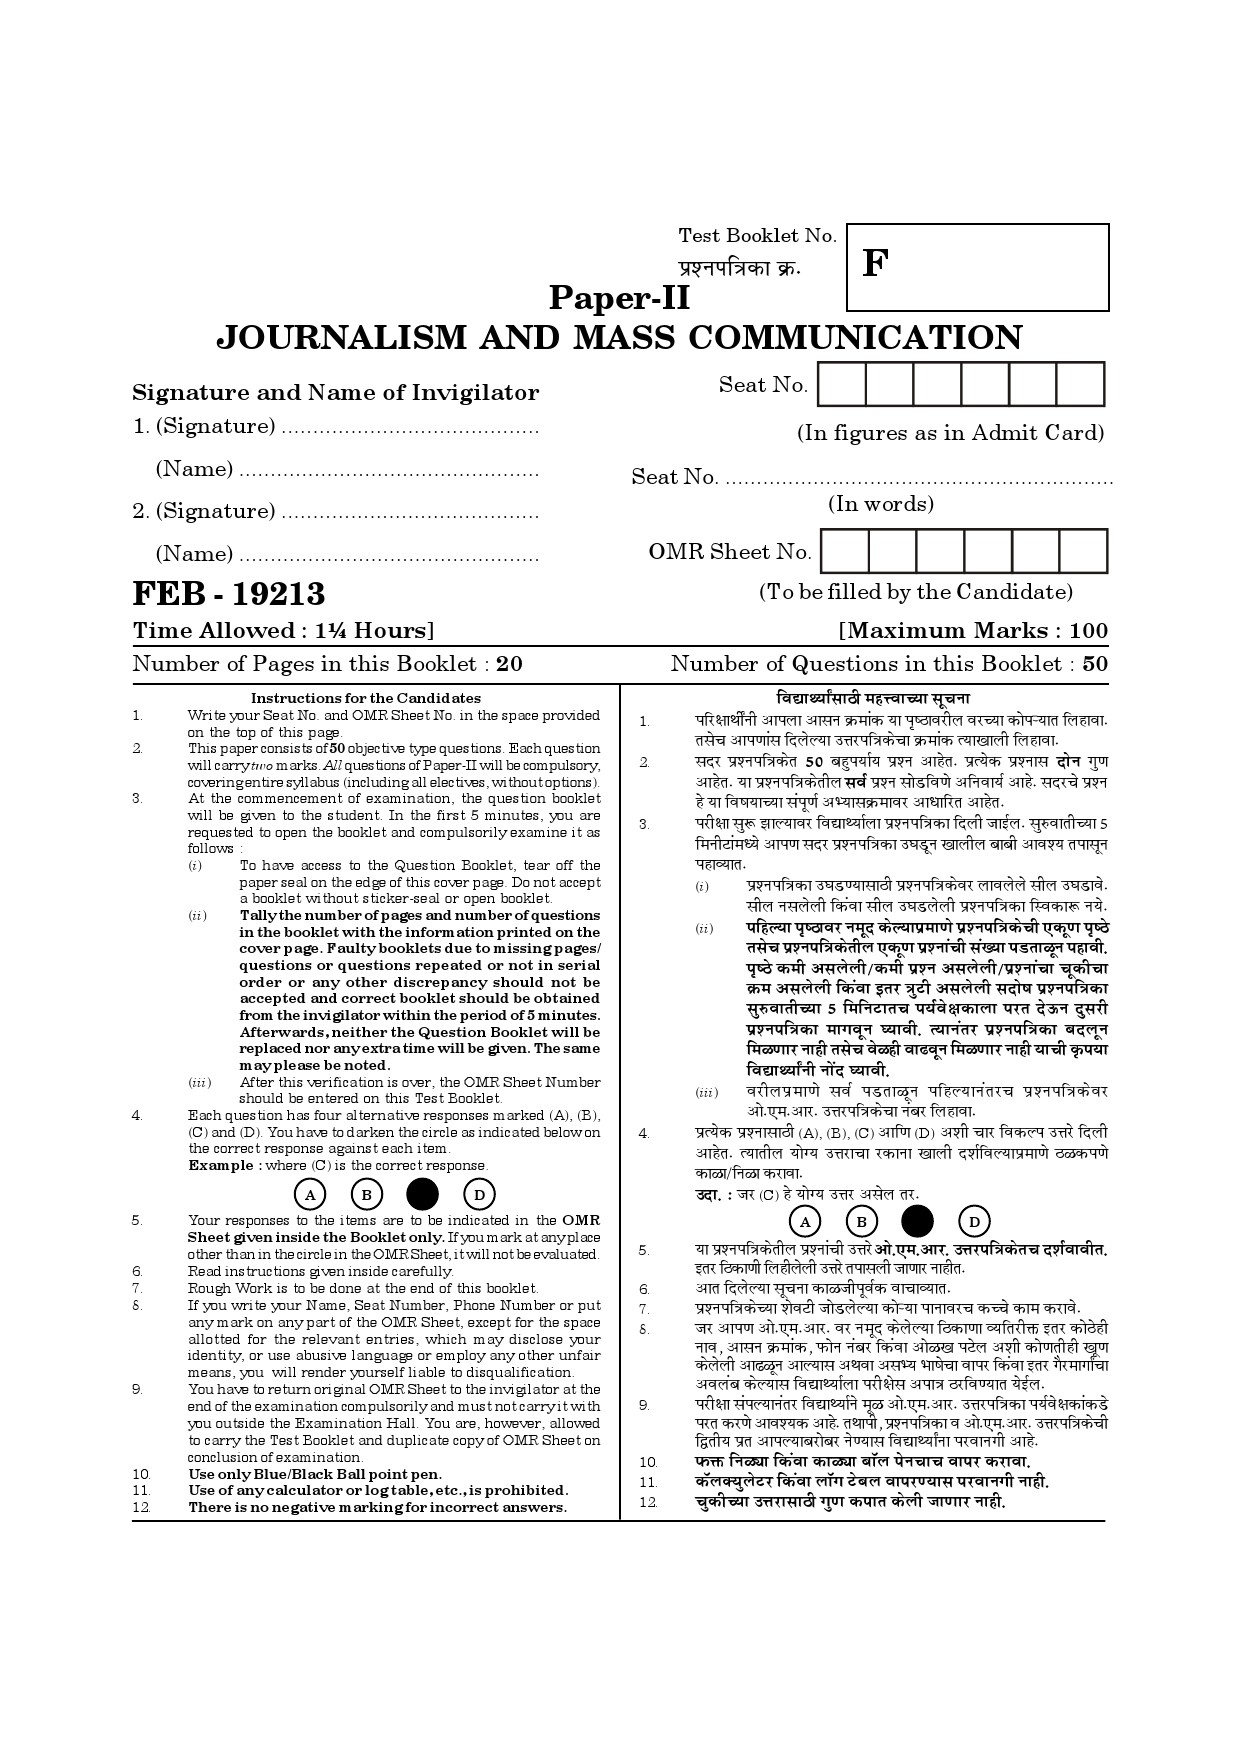 Maharashtra SET Journalism and Mass Communication Question Paper II February 2013 17